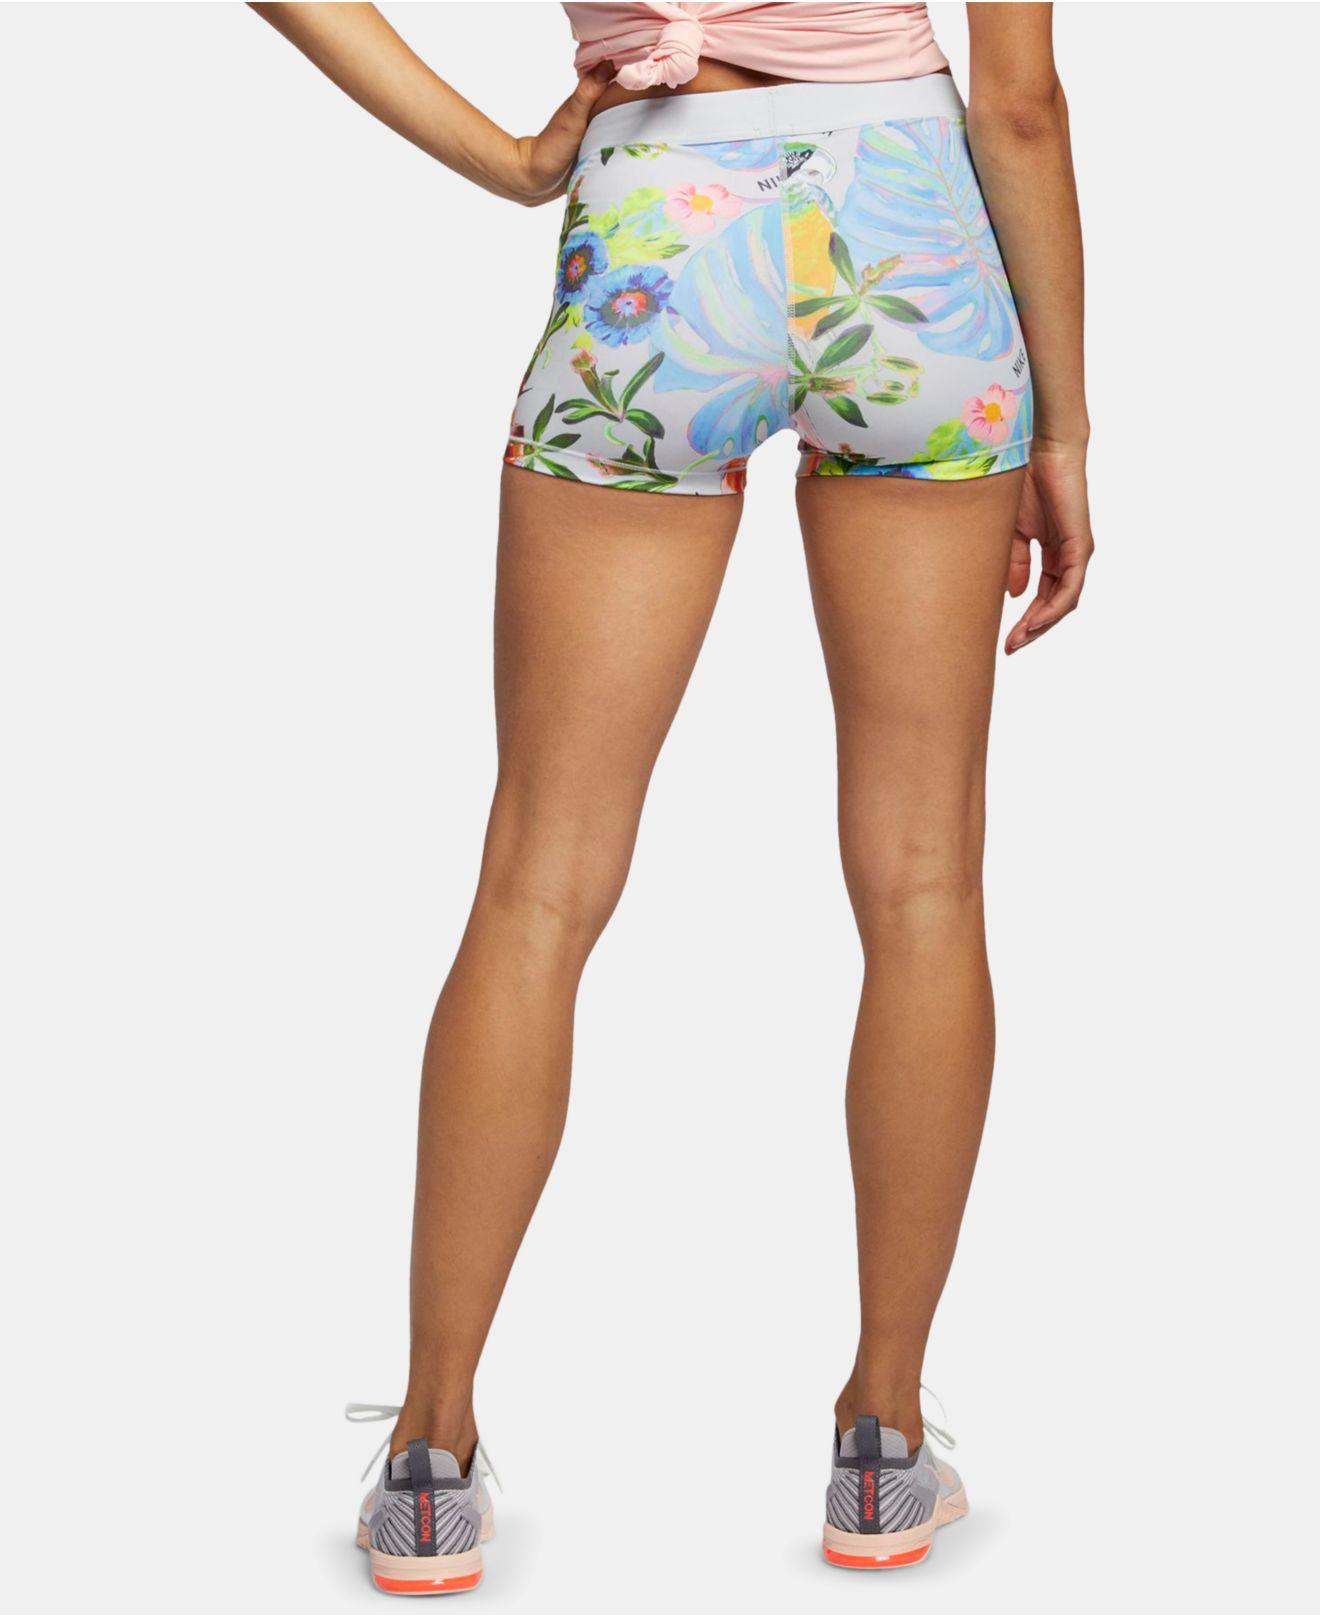 nike pro ultra femme printed shorts Off 63% - sirinscrochet.com